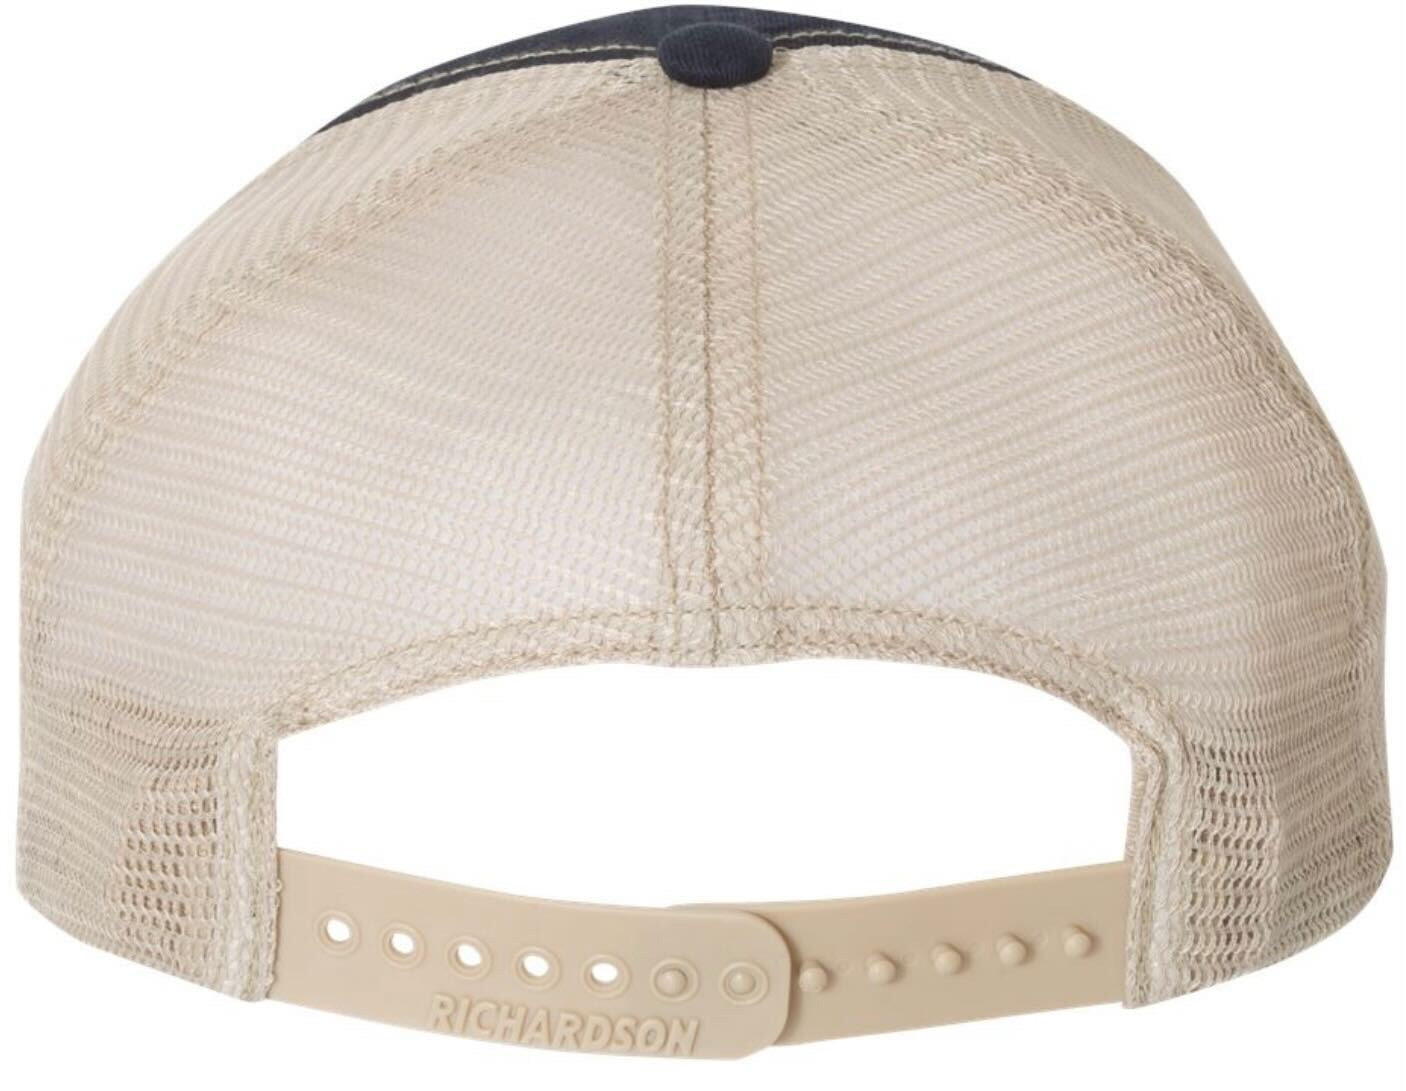 Bed-Stuy Brooklyn Classic Sport Vintage Hat in Navy/Vanilla